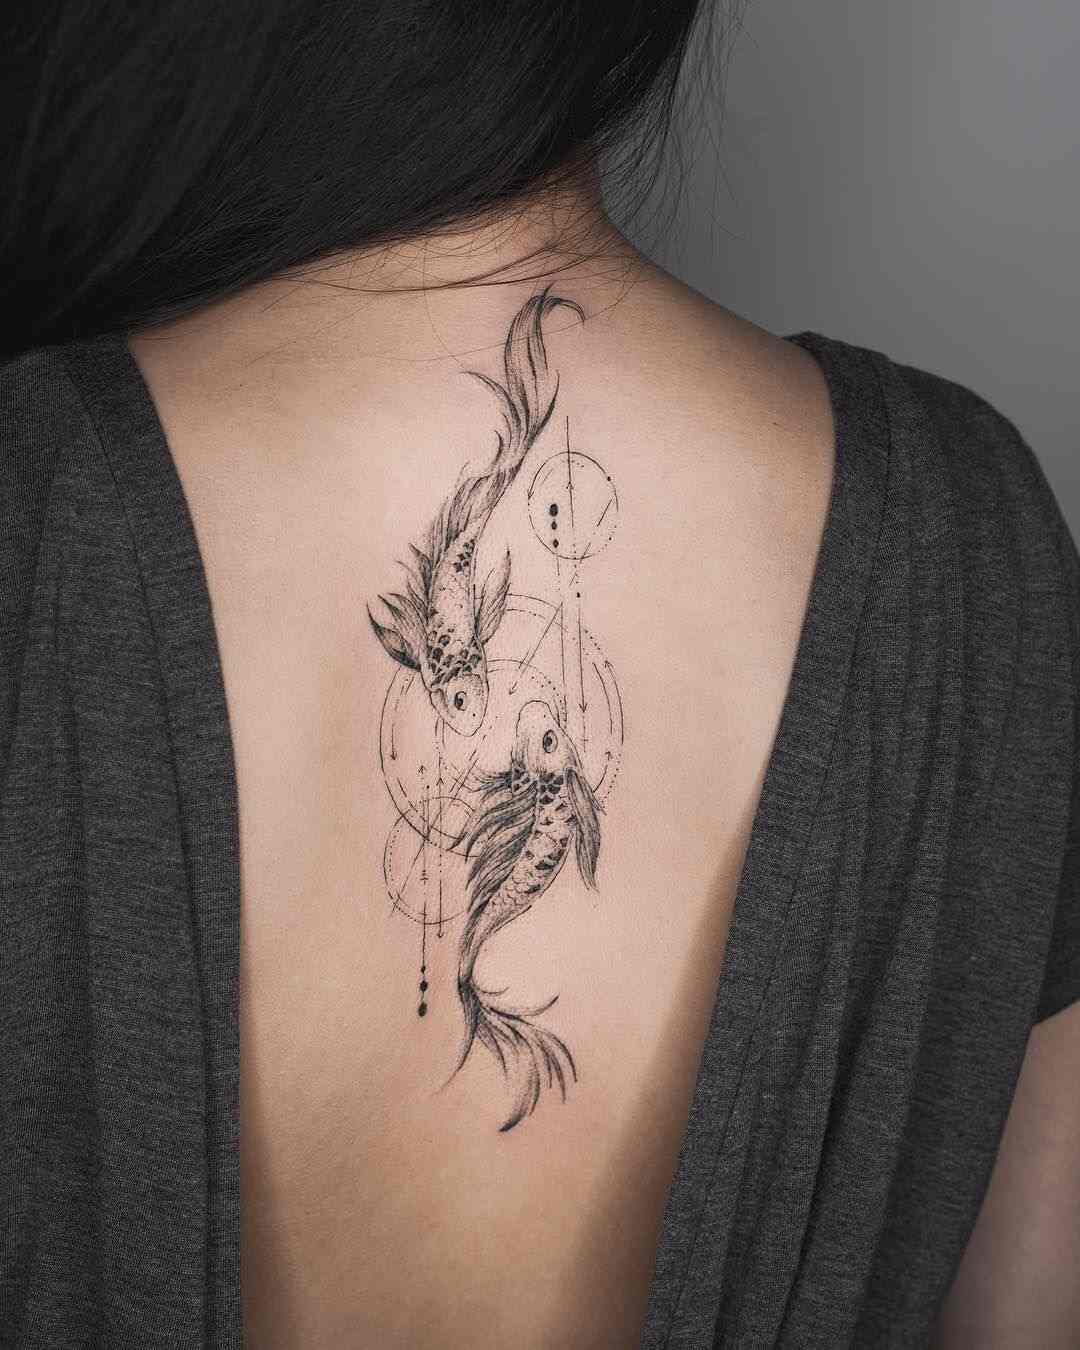 Zodiac tatovering fisk tilbage tatovering ideer tatovering design tatovering tendenser kvinder